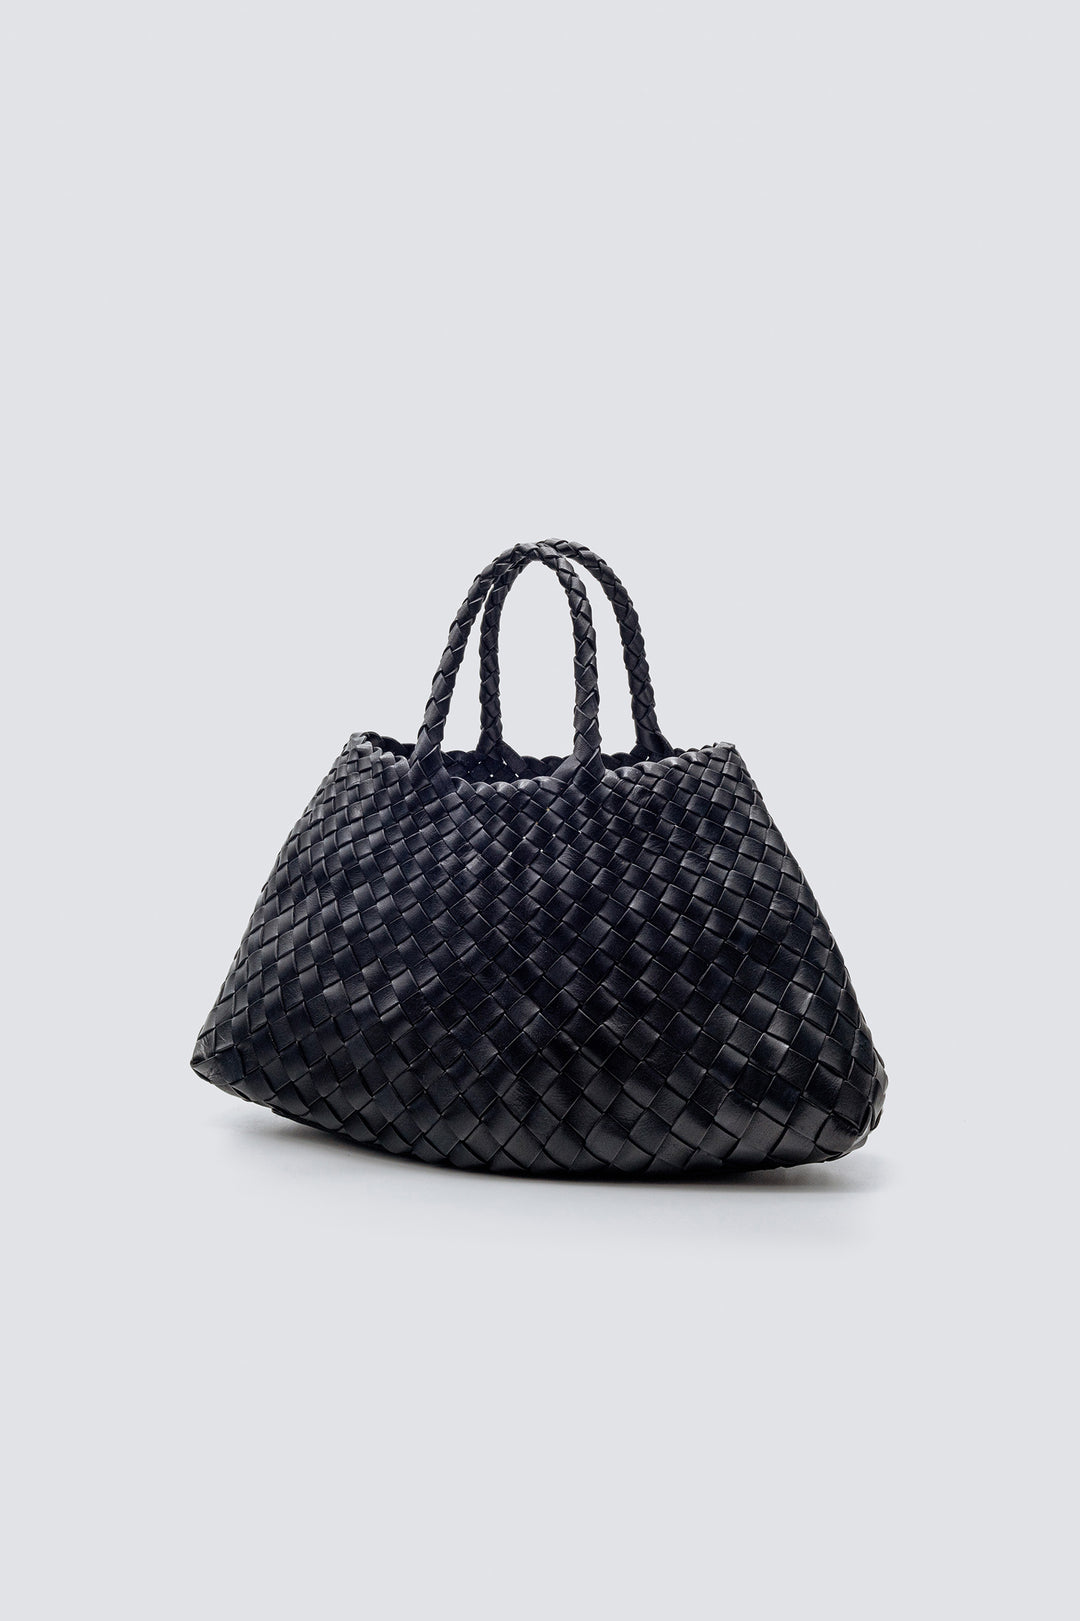 Dragon Diffusion woven leather bag handmade - Santa Croce Small Black